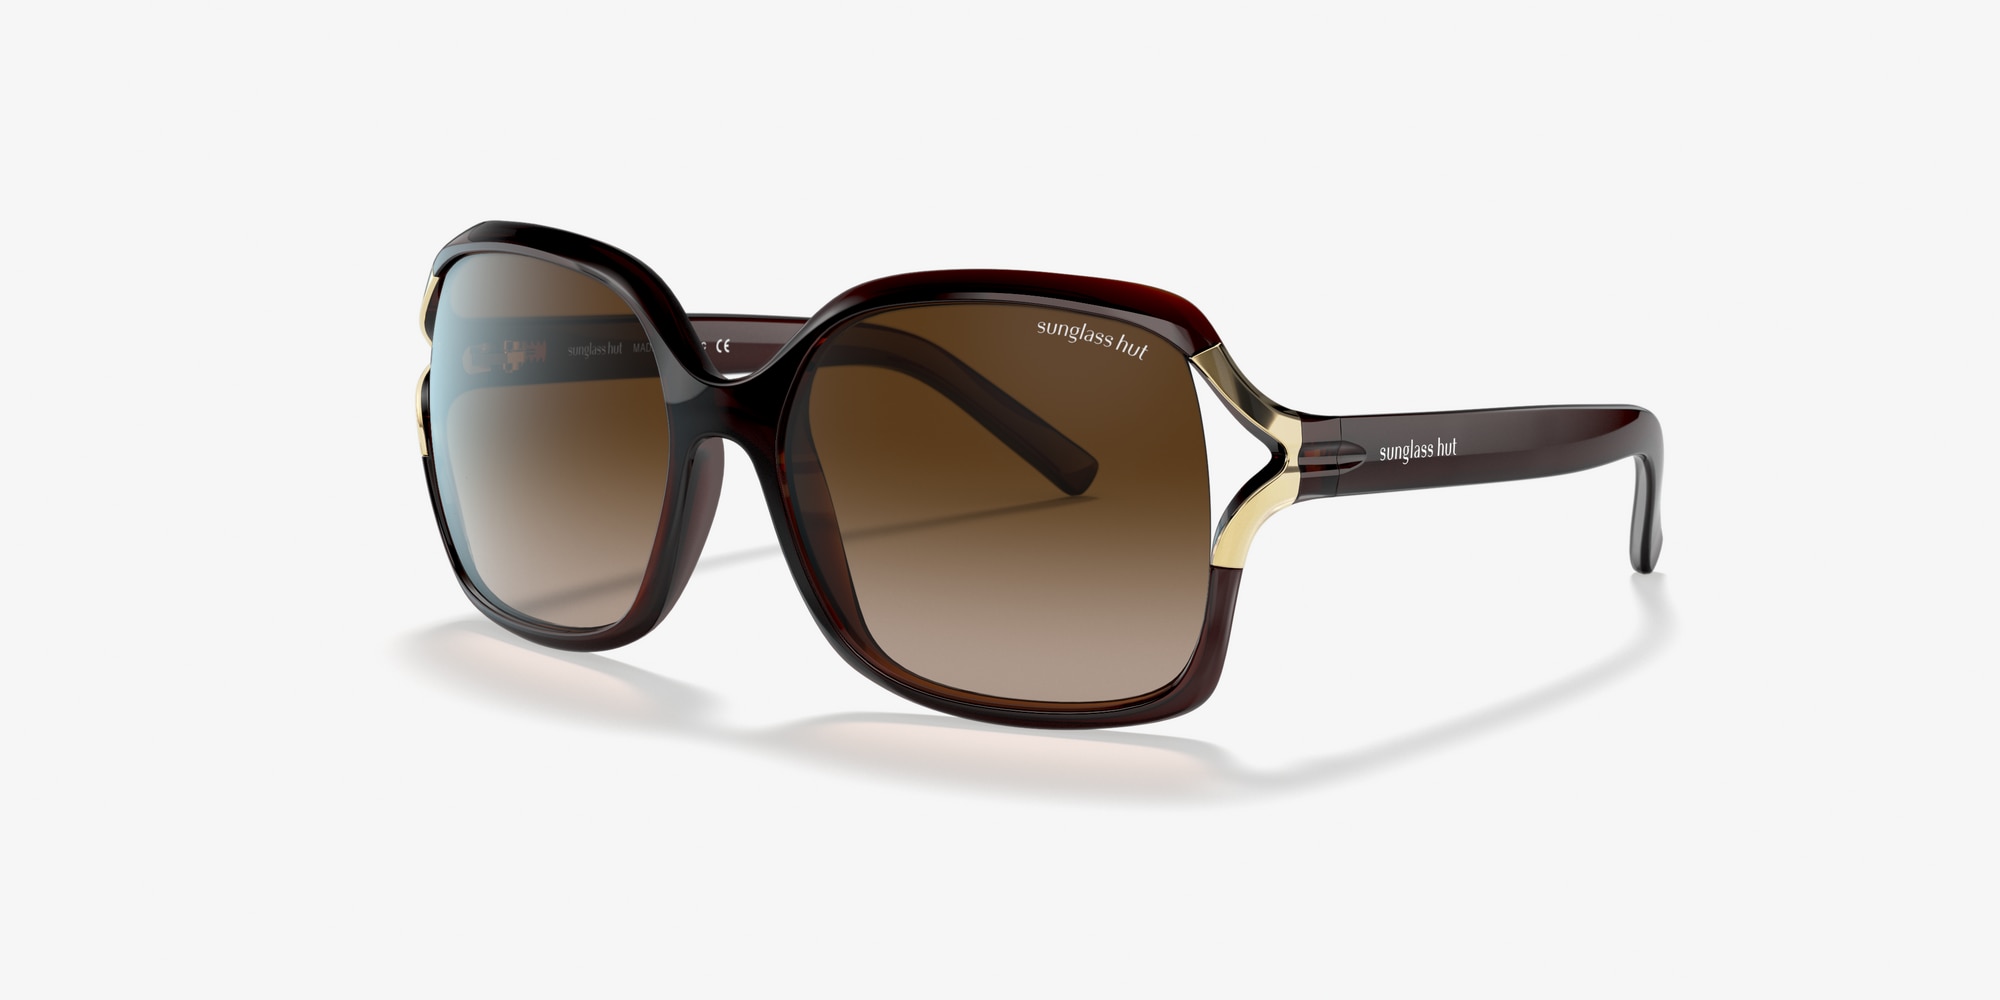 Tiffany & Co. Sunglasses | Sunglass Hut®